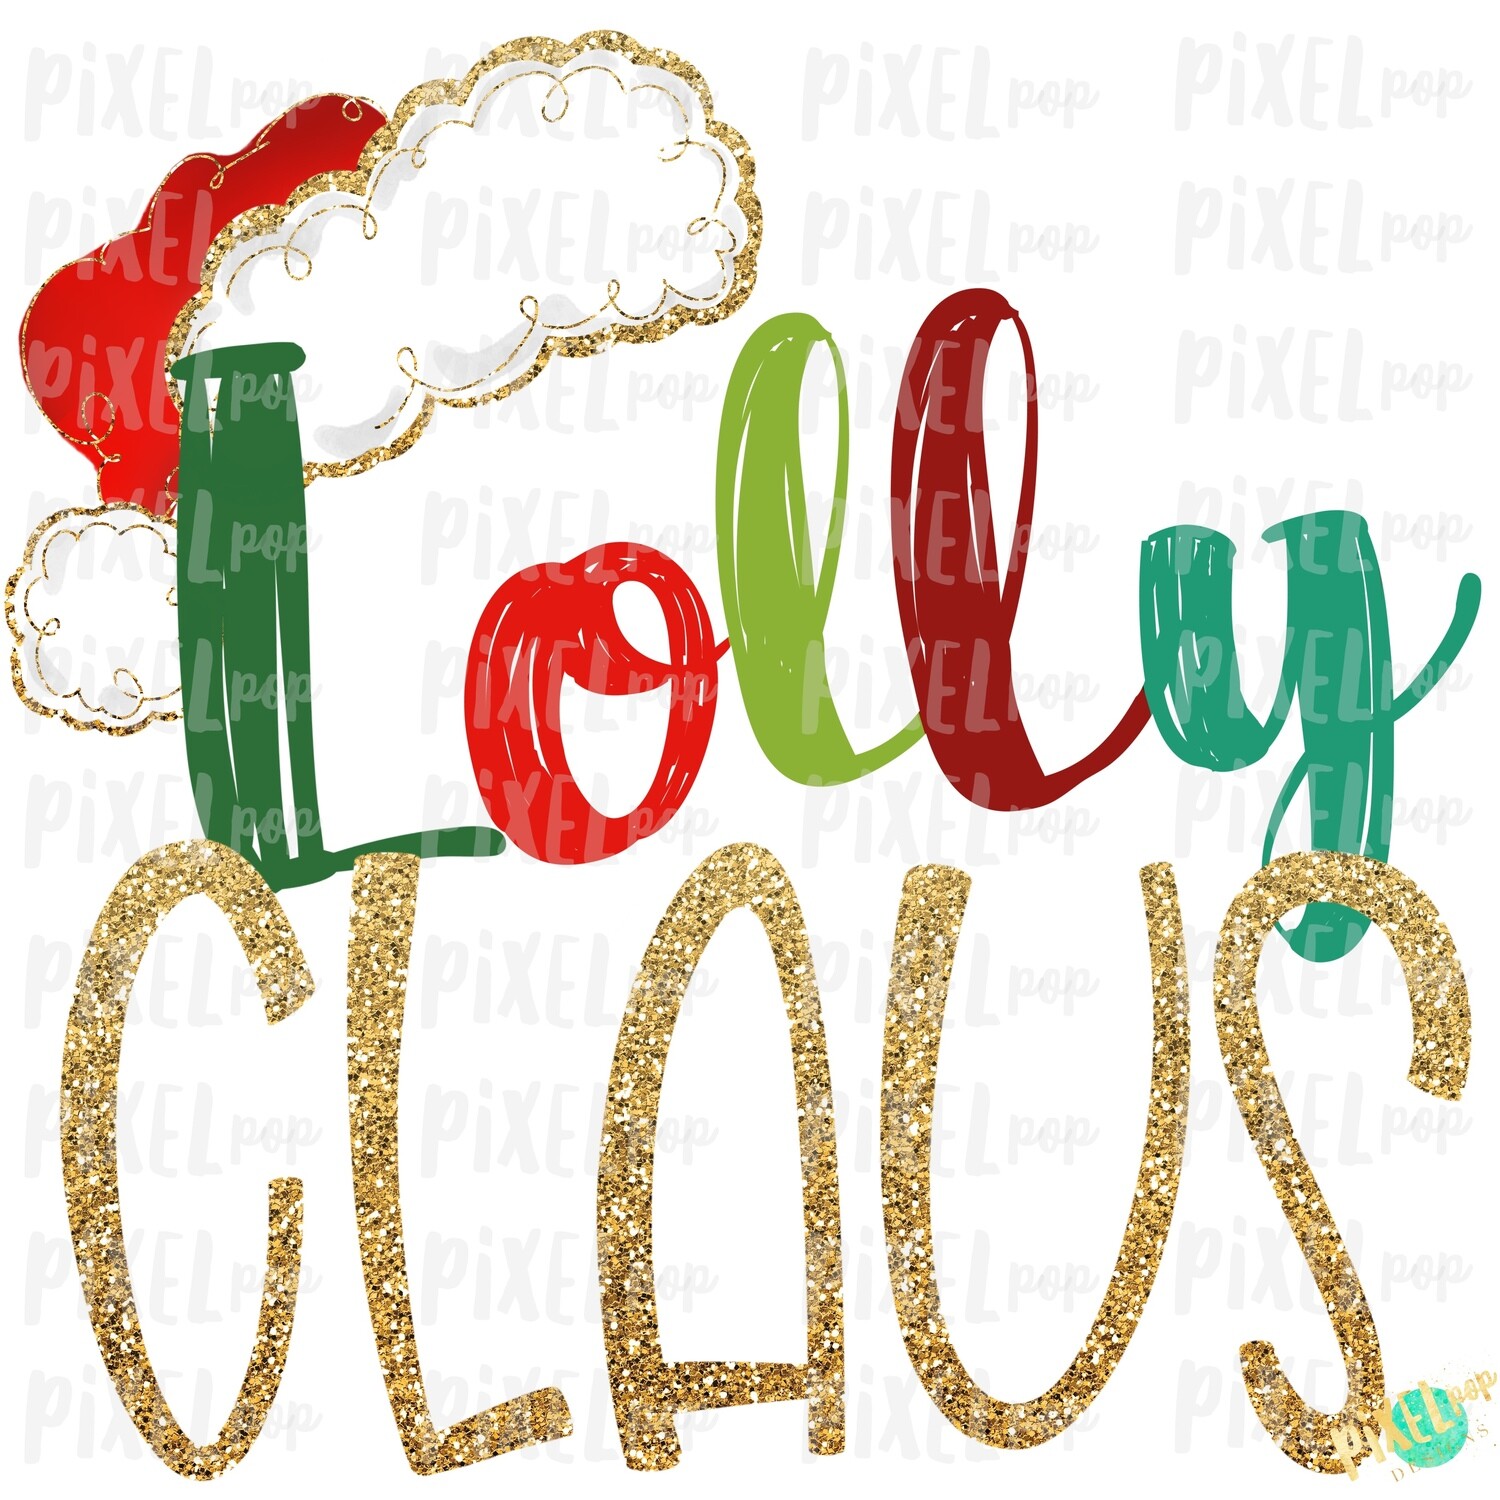 Lolly Claus Santa Hat Digital Watercolor Sublimation PNG Art | Drawn Design | Sublimation PNG | Digital Download | Printable Artwork | Art